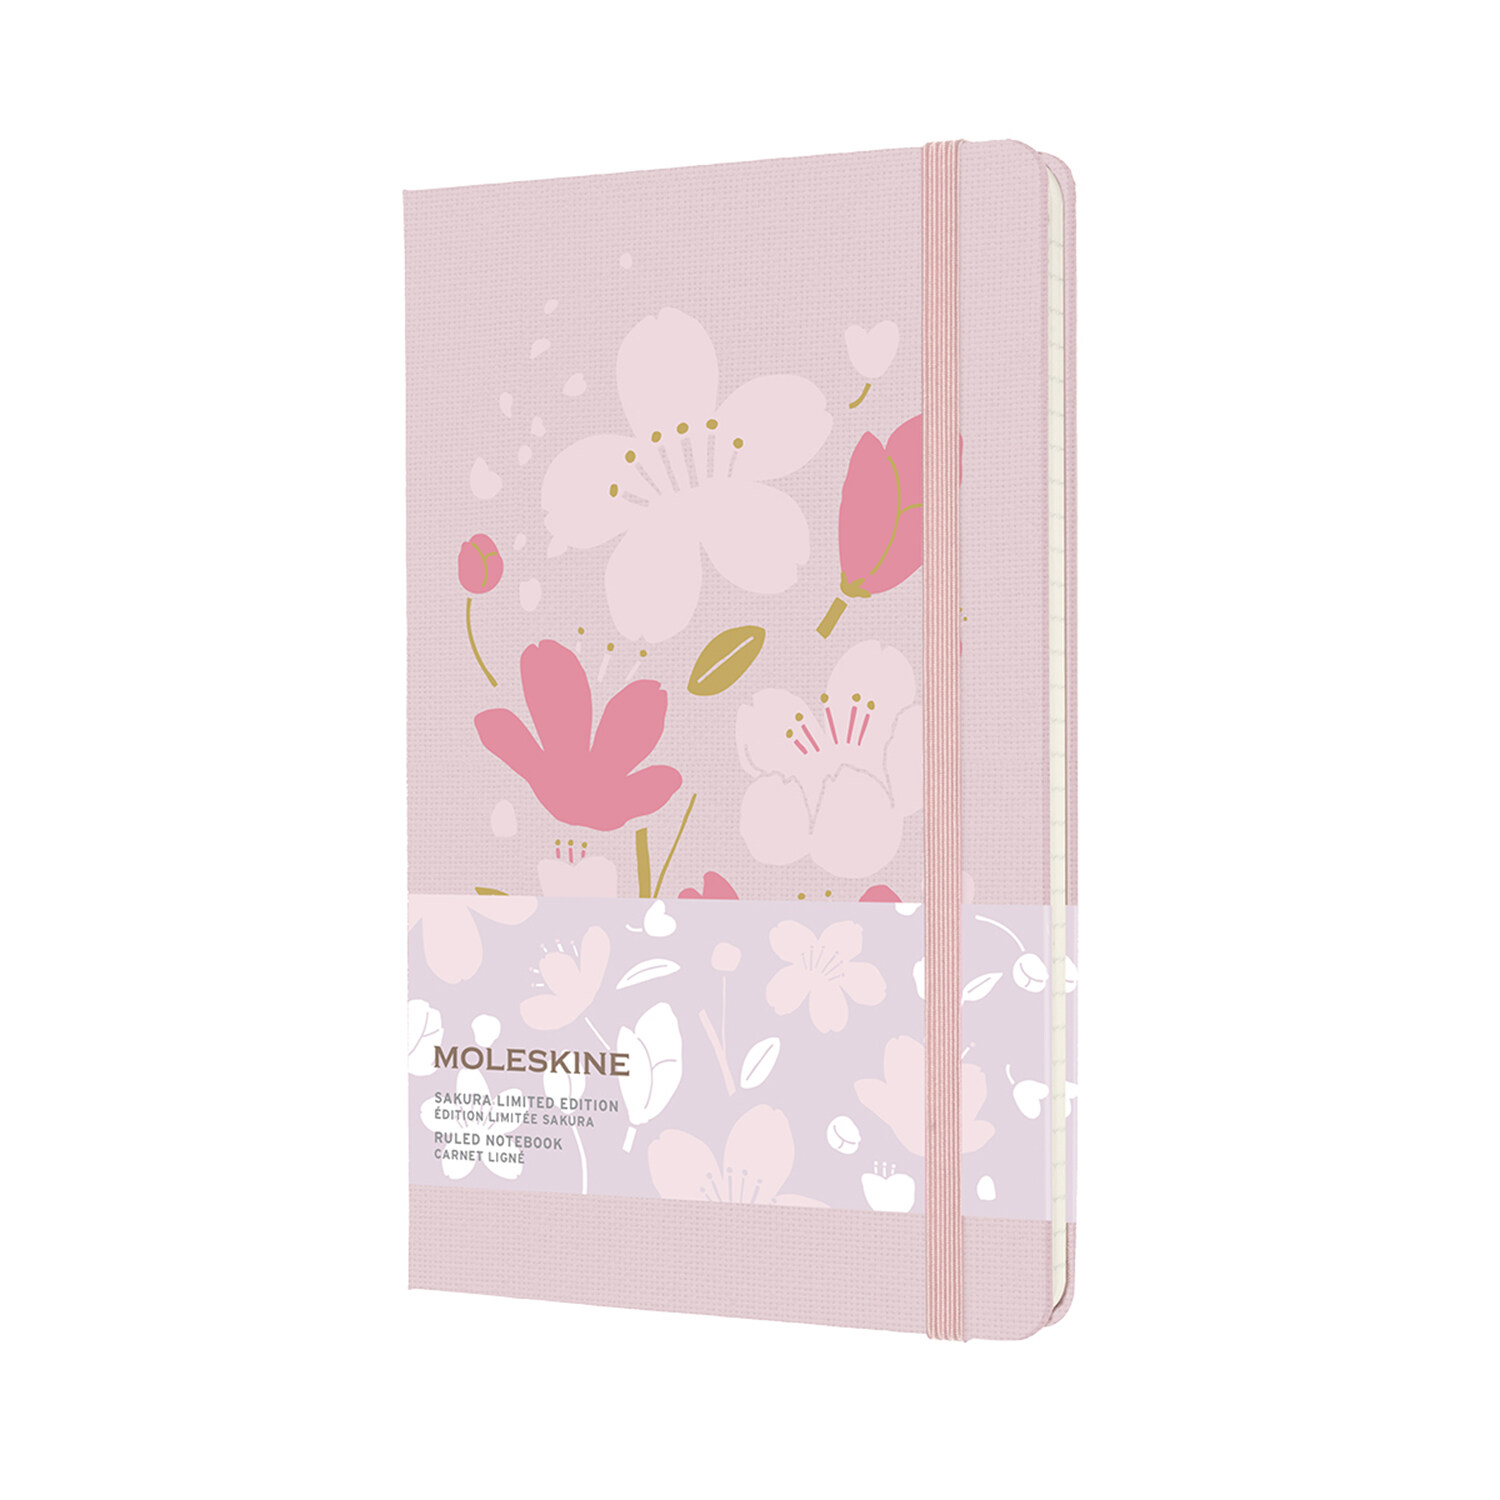 Moleskine Limited Edition Sakura Notebook, Large, Ruled, Dark Pink, Hard Cover (5 X 8.25) (Hardcover)